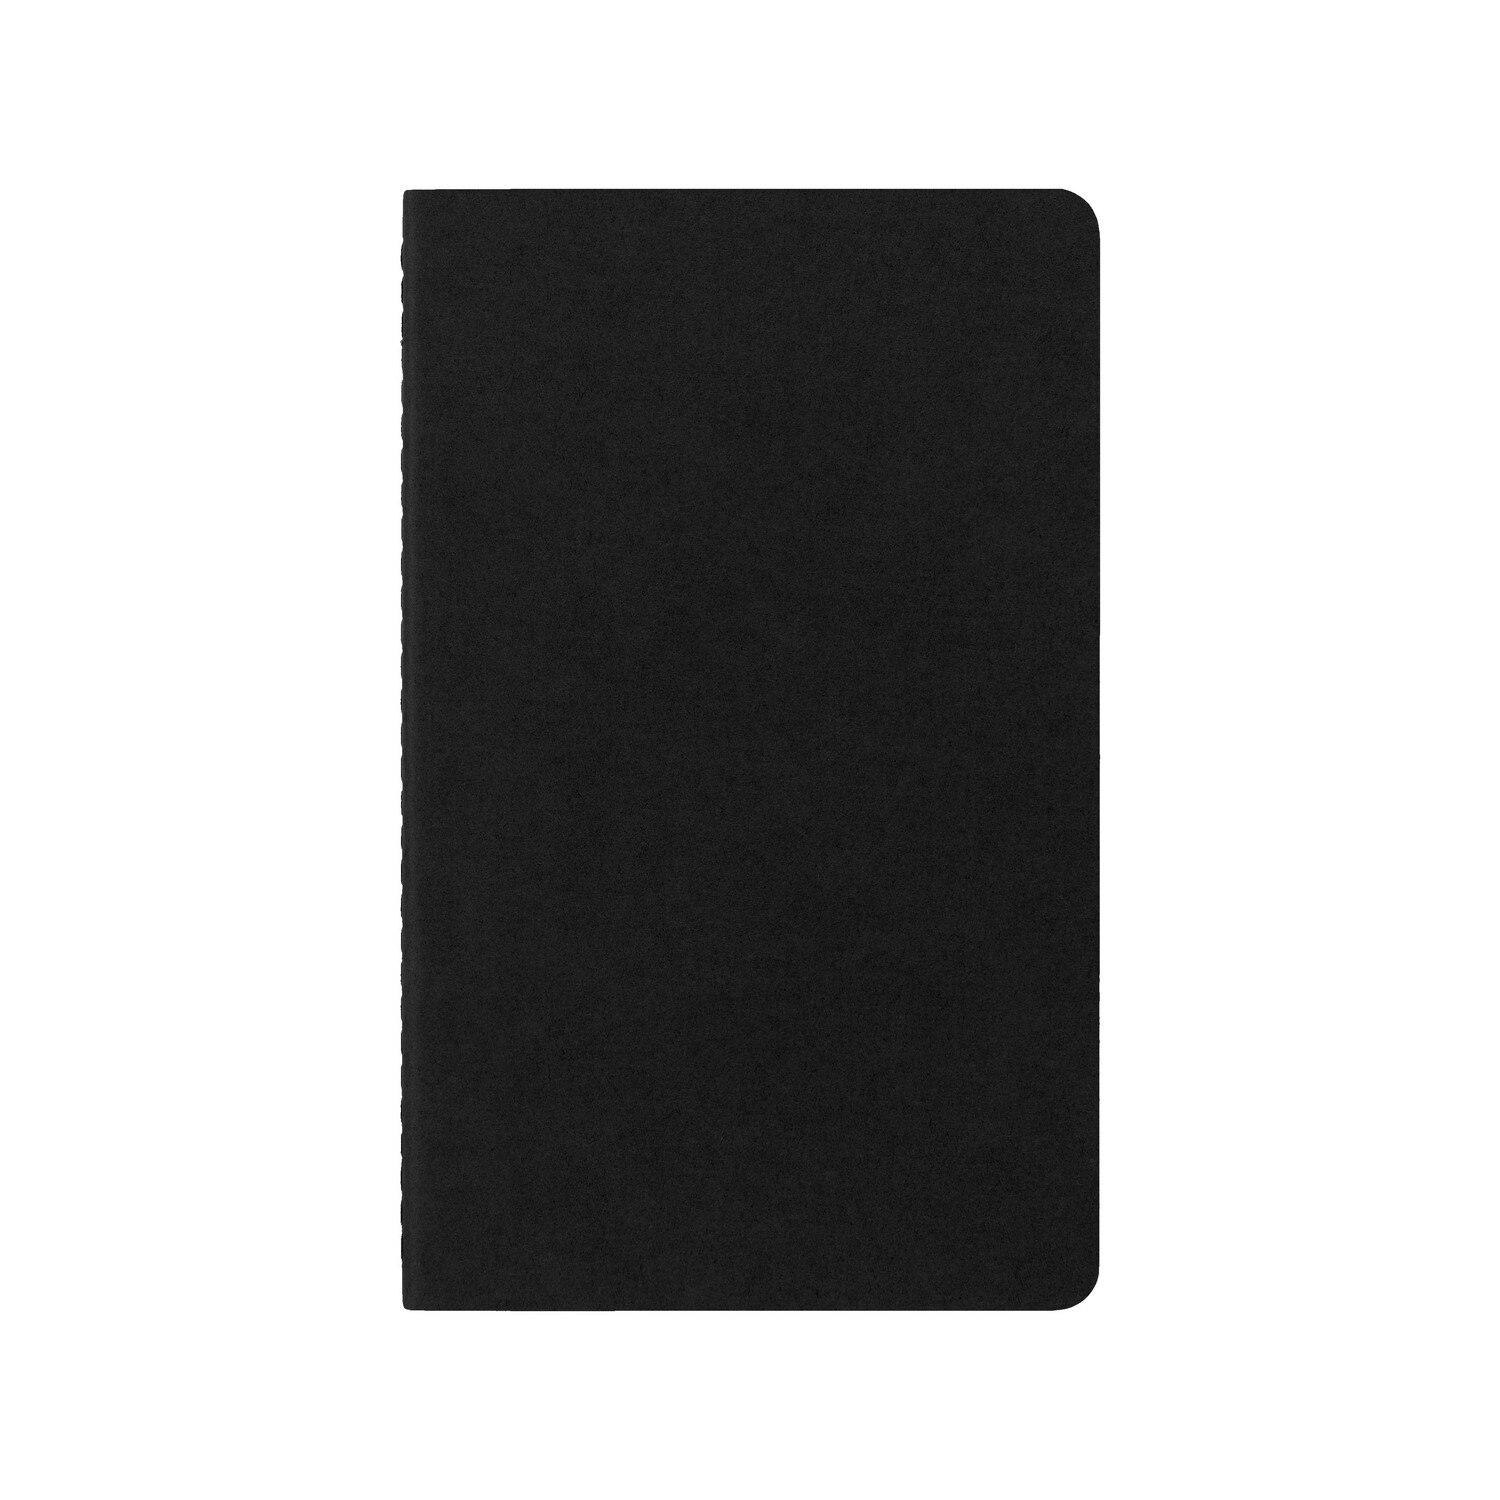 Moleskine Cahier Journal (Set of 3)Pocket Plain Black Soft Cover